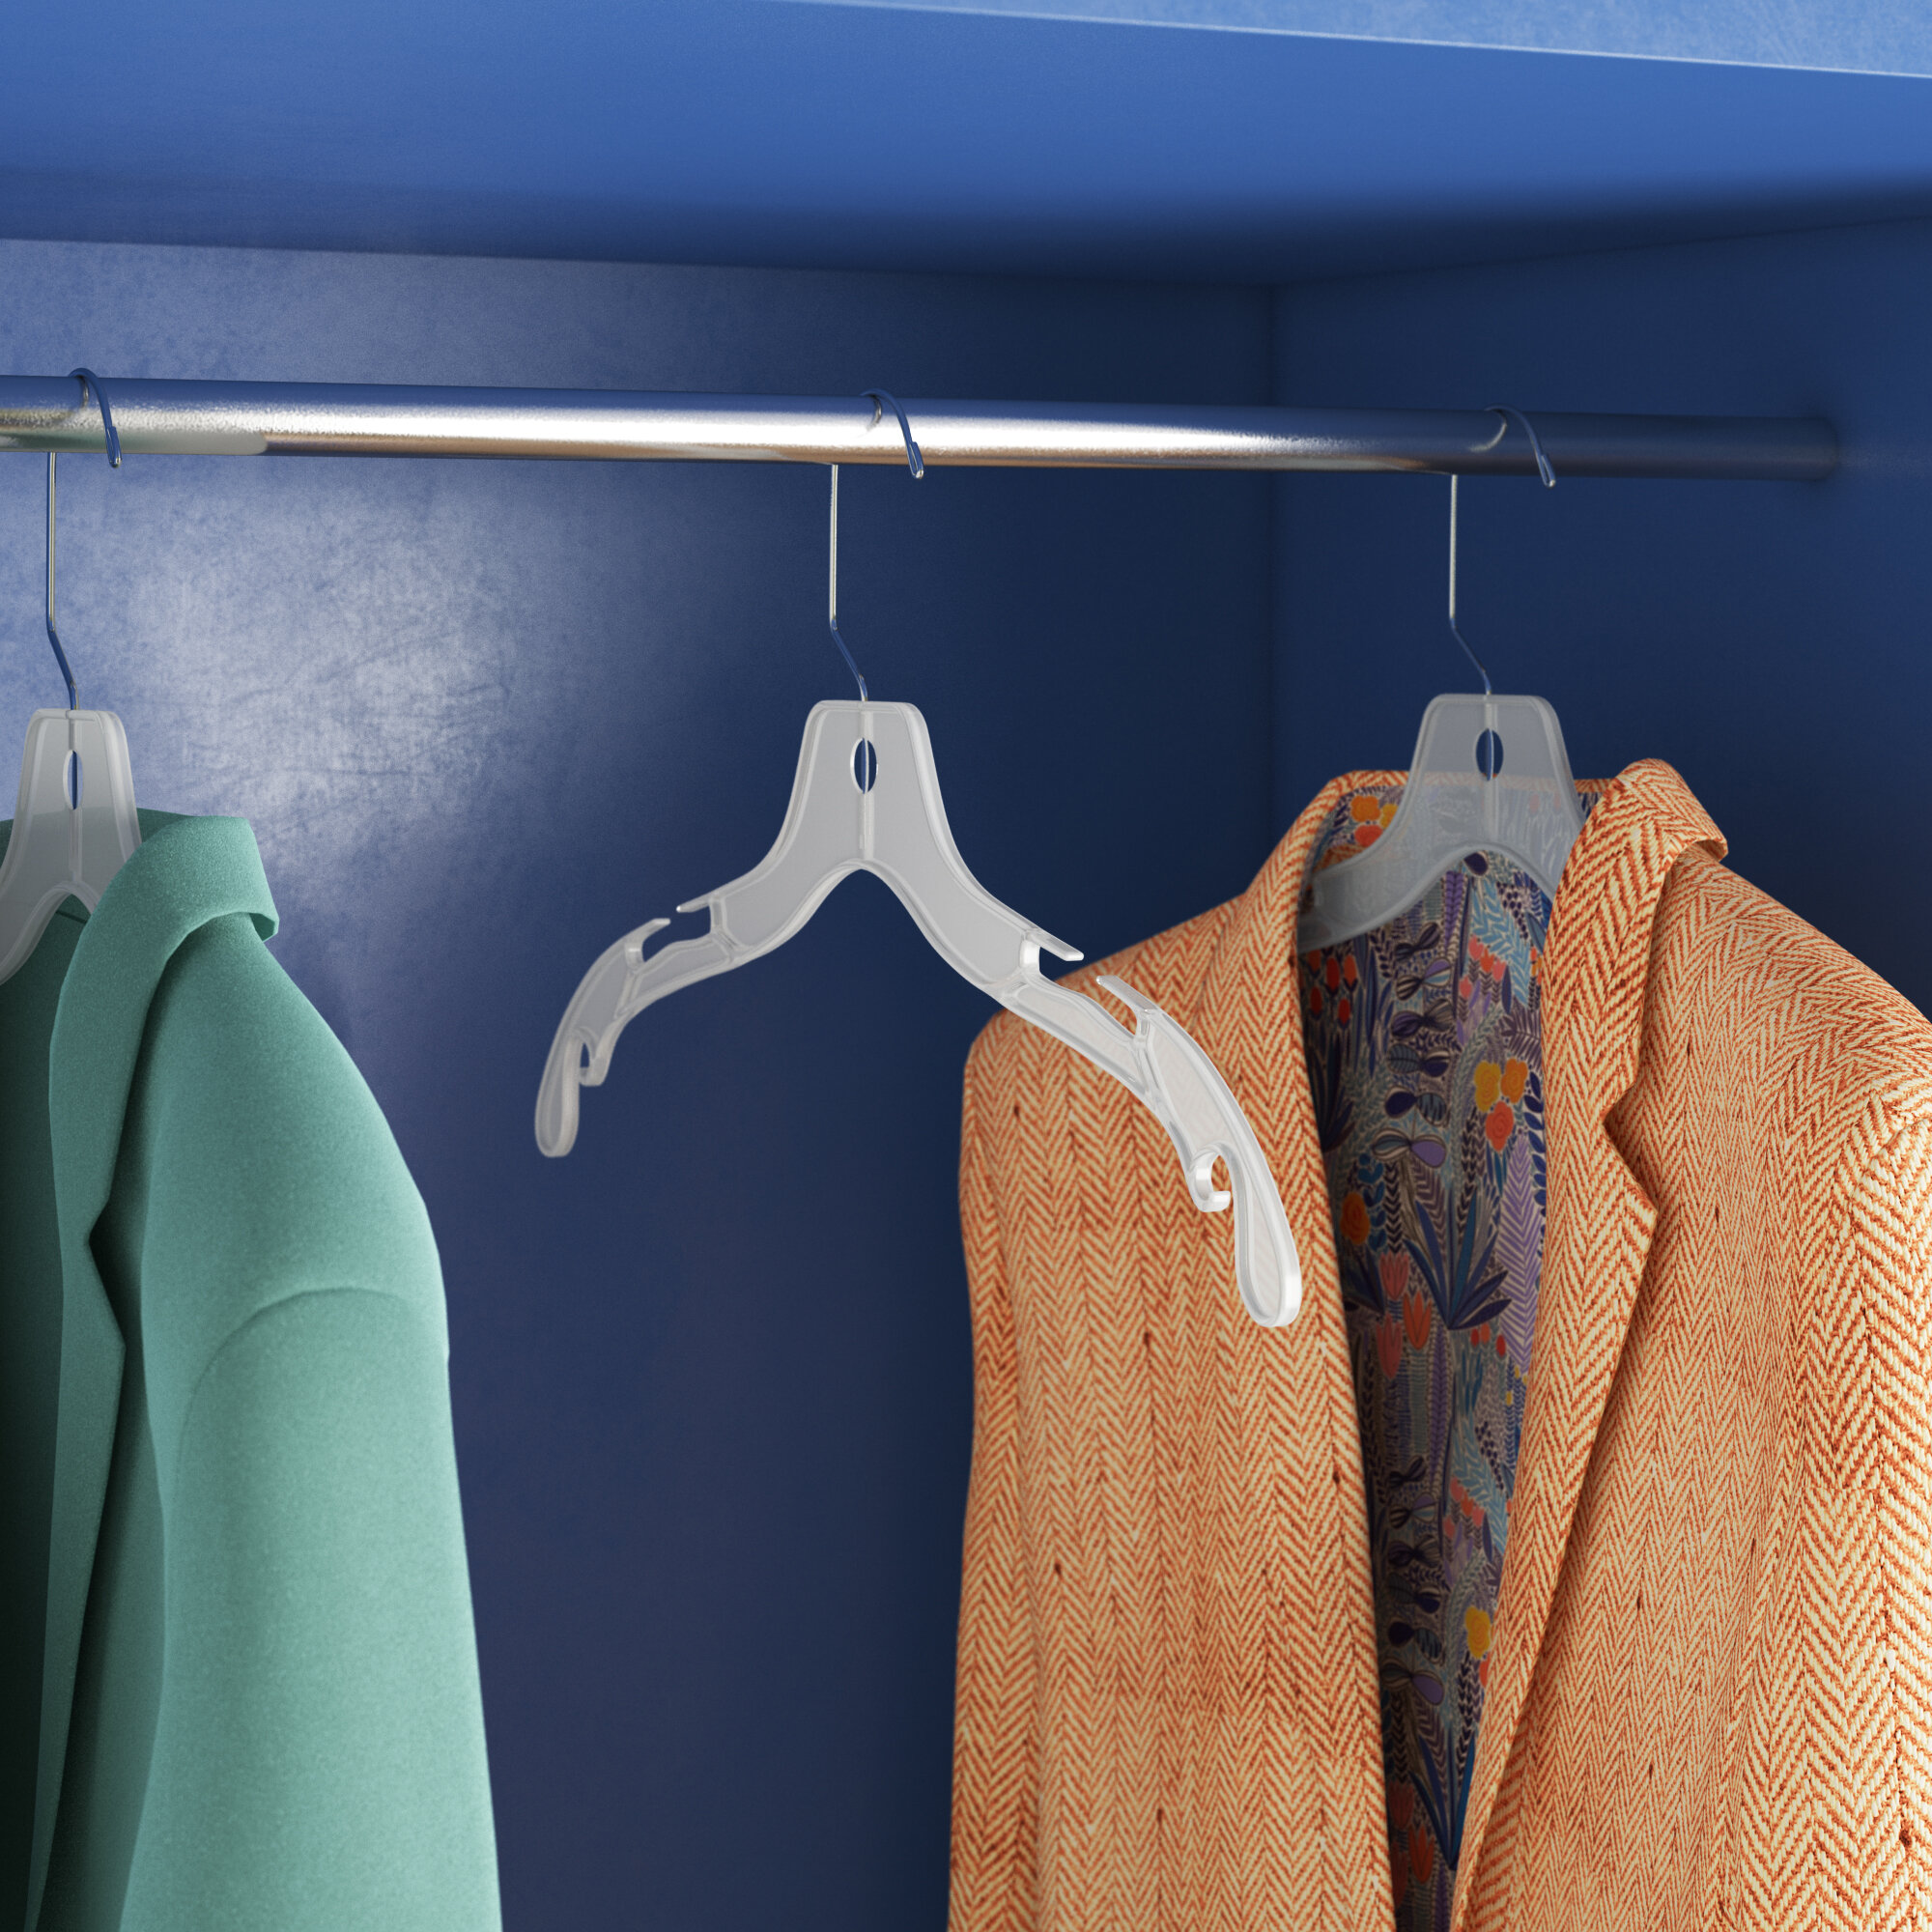 Simplify Kids 100 Pack Velvet Shirt Hangers in Neon Colors